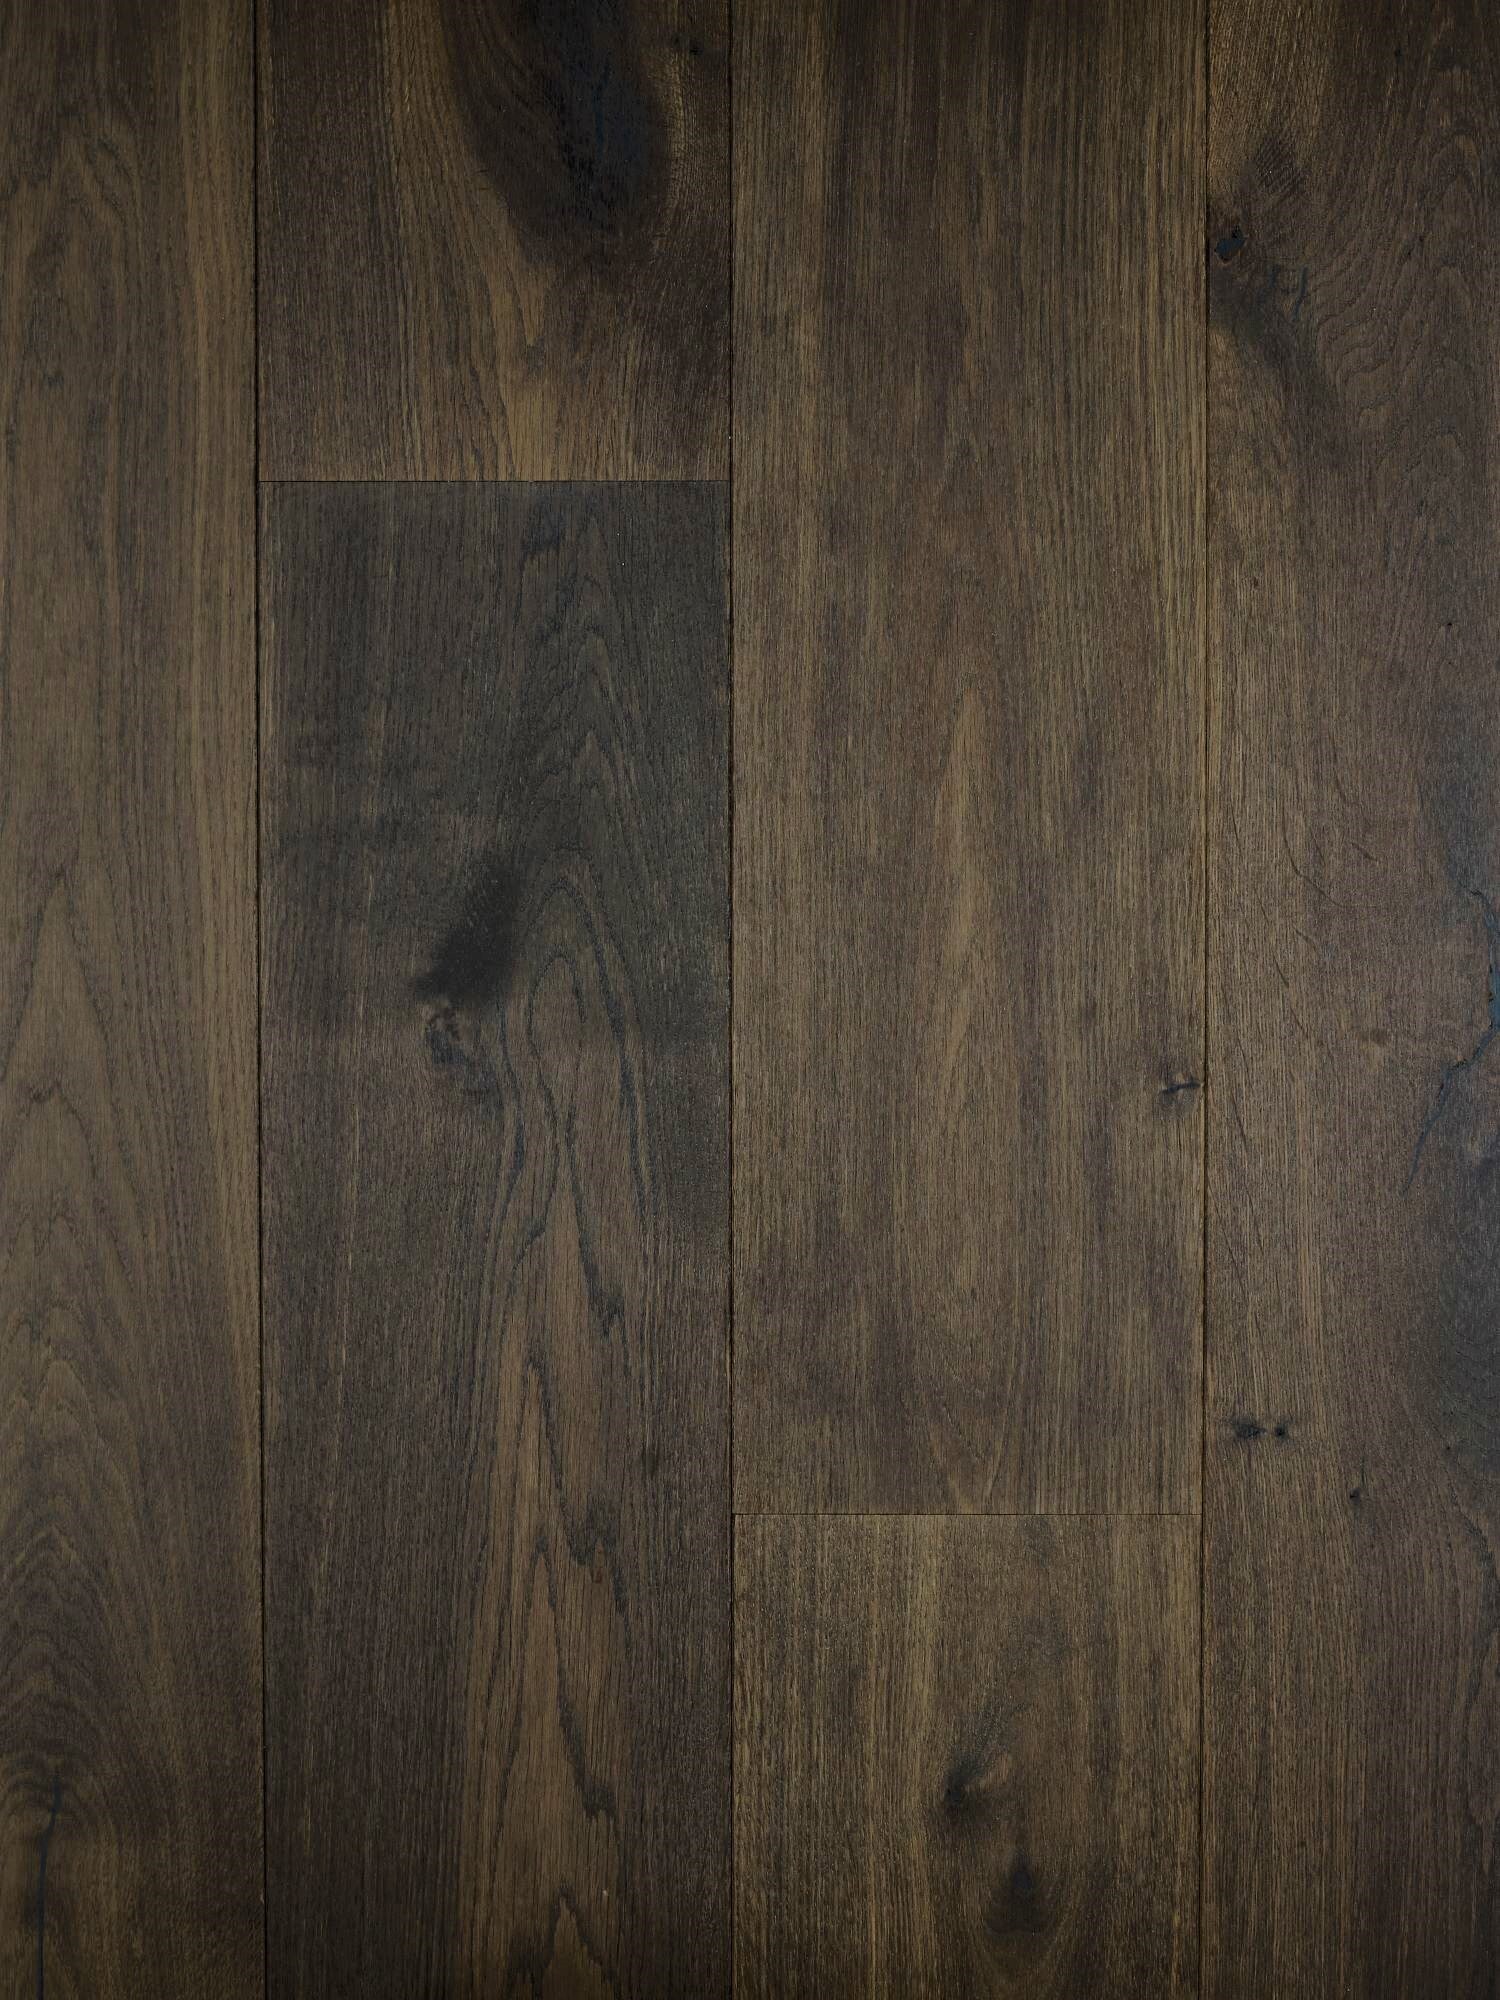 Dark oak flooring havana with black oil